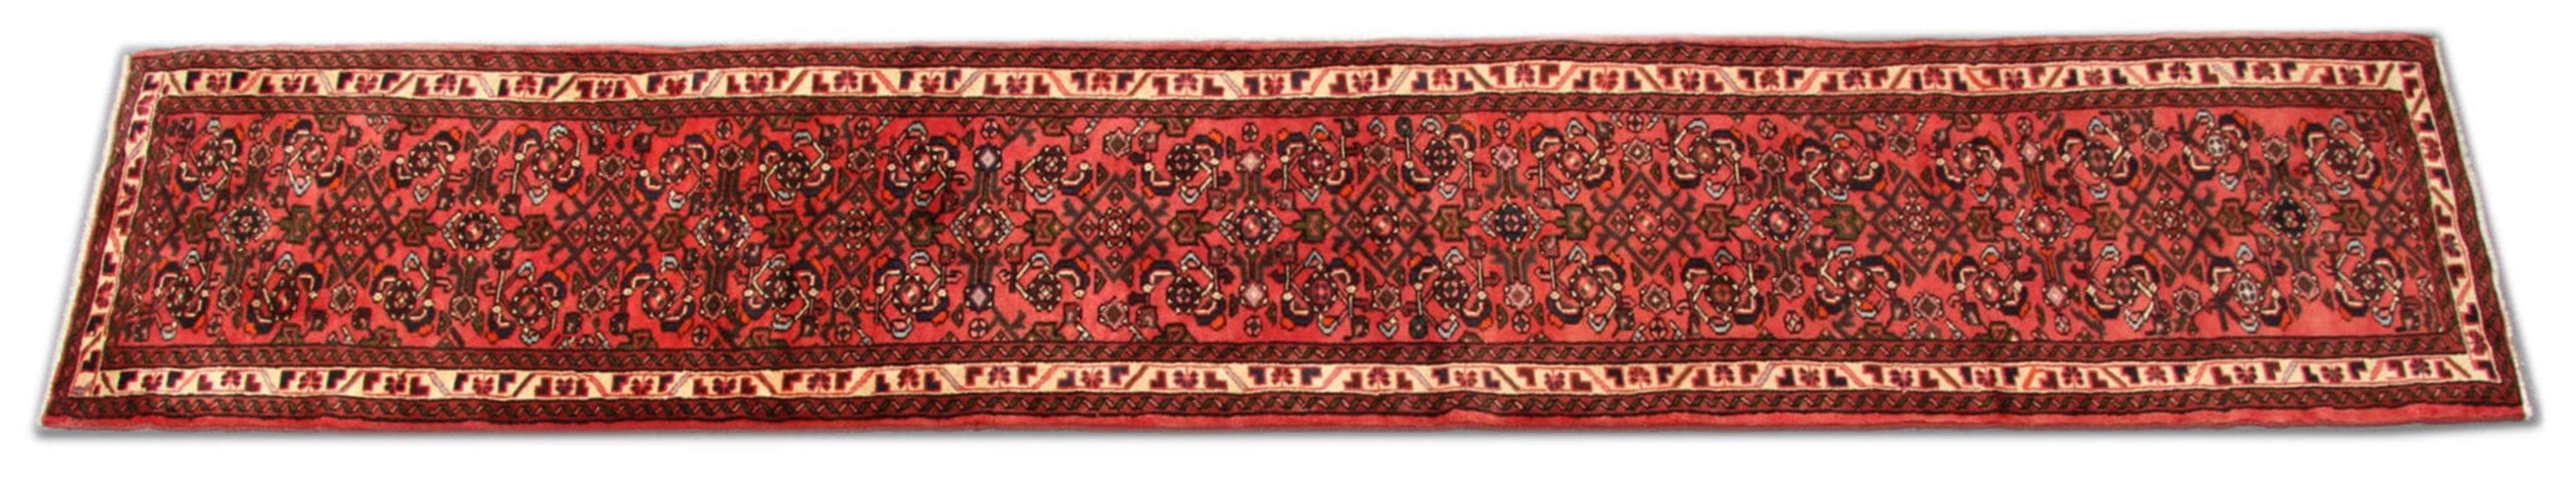 Persian Vintage Hussein Abad Carpet Runner, Geometric Traditional Runner Rug For Sale